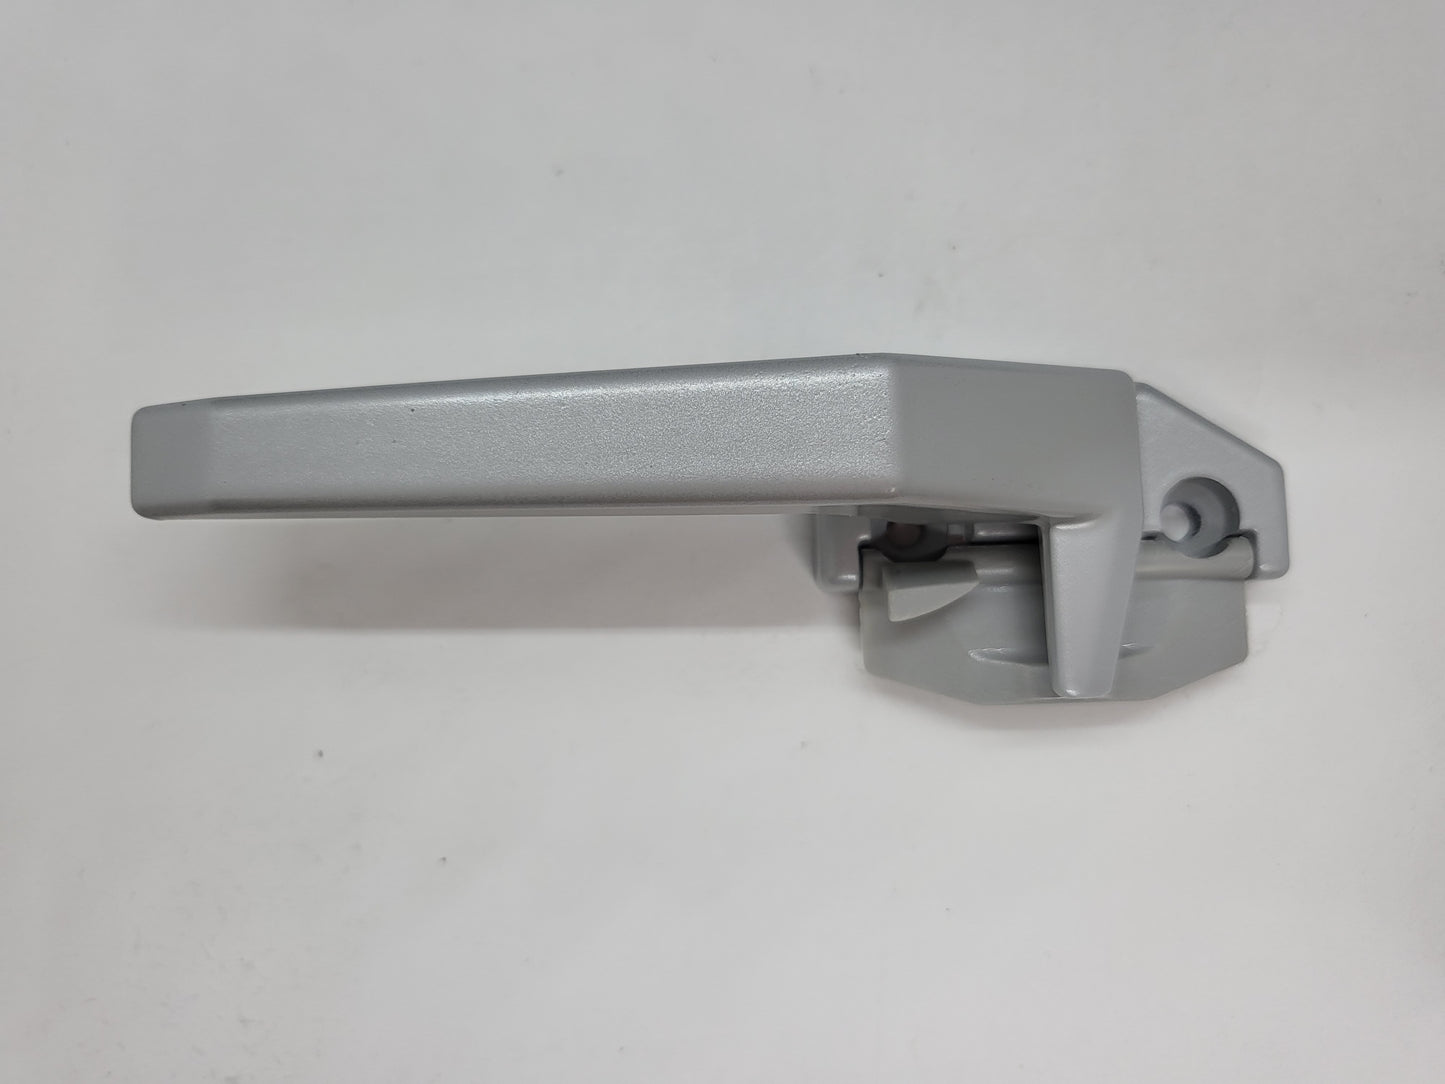 Whitco wedgeless CAM handle - non locking - AWS silver